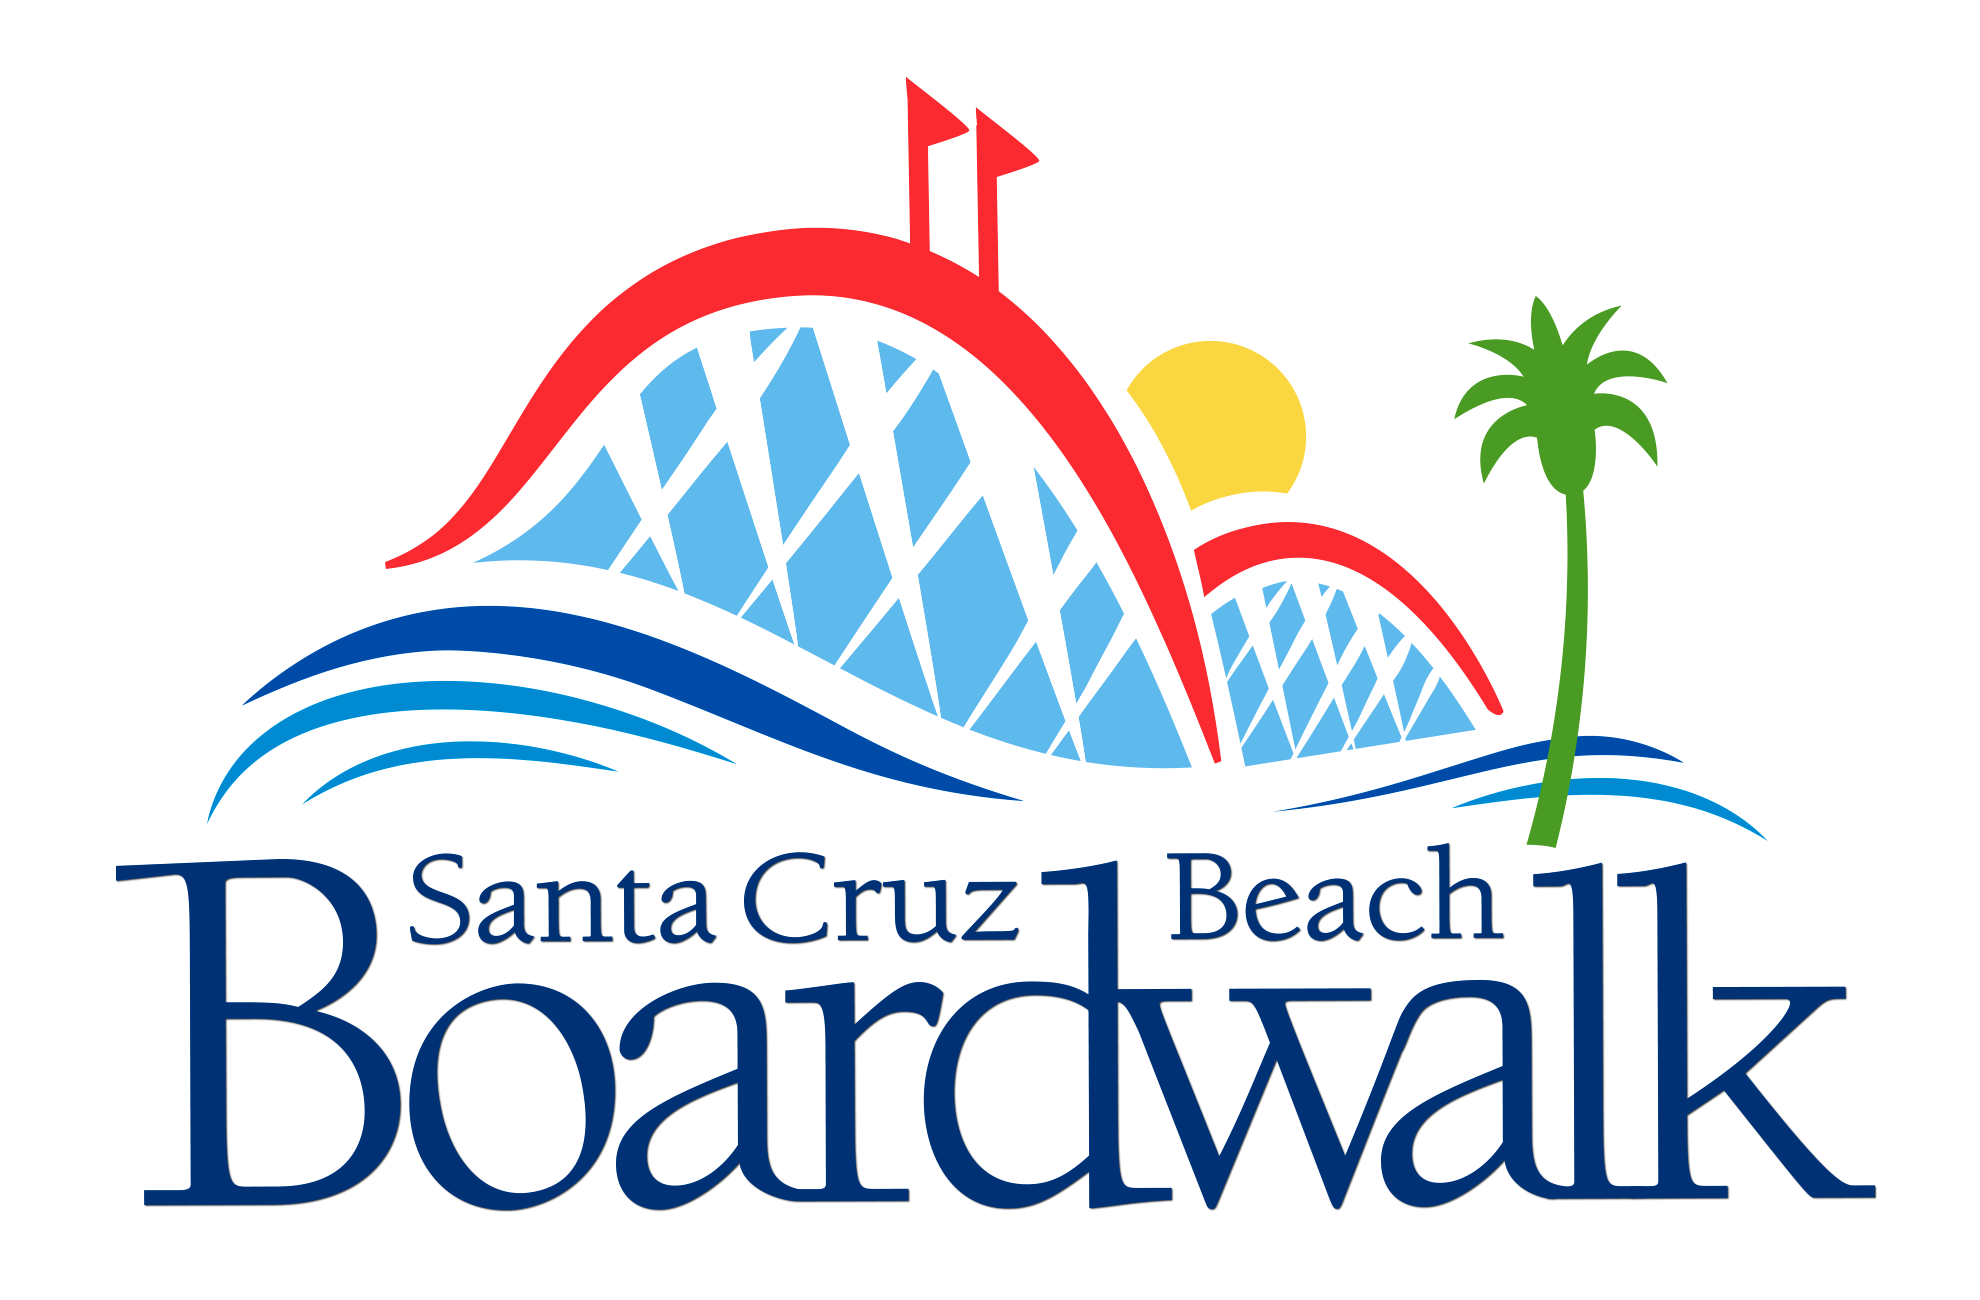 Santa Cruz Beach Boardwalk Winter Wonderland celebrates the holiday